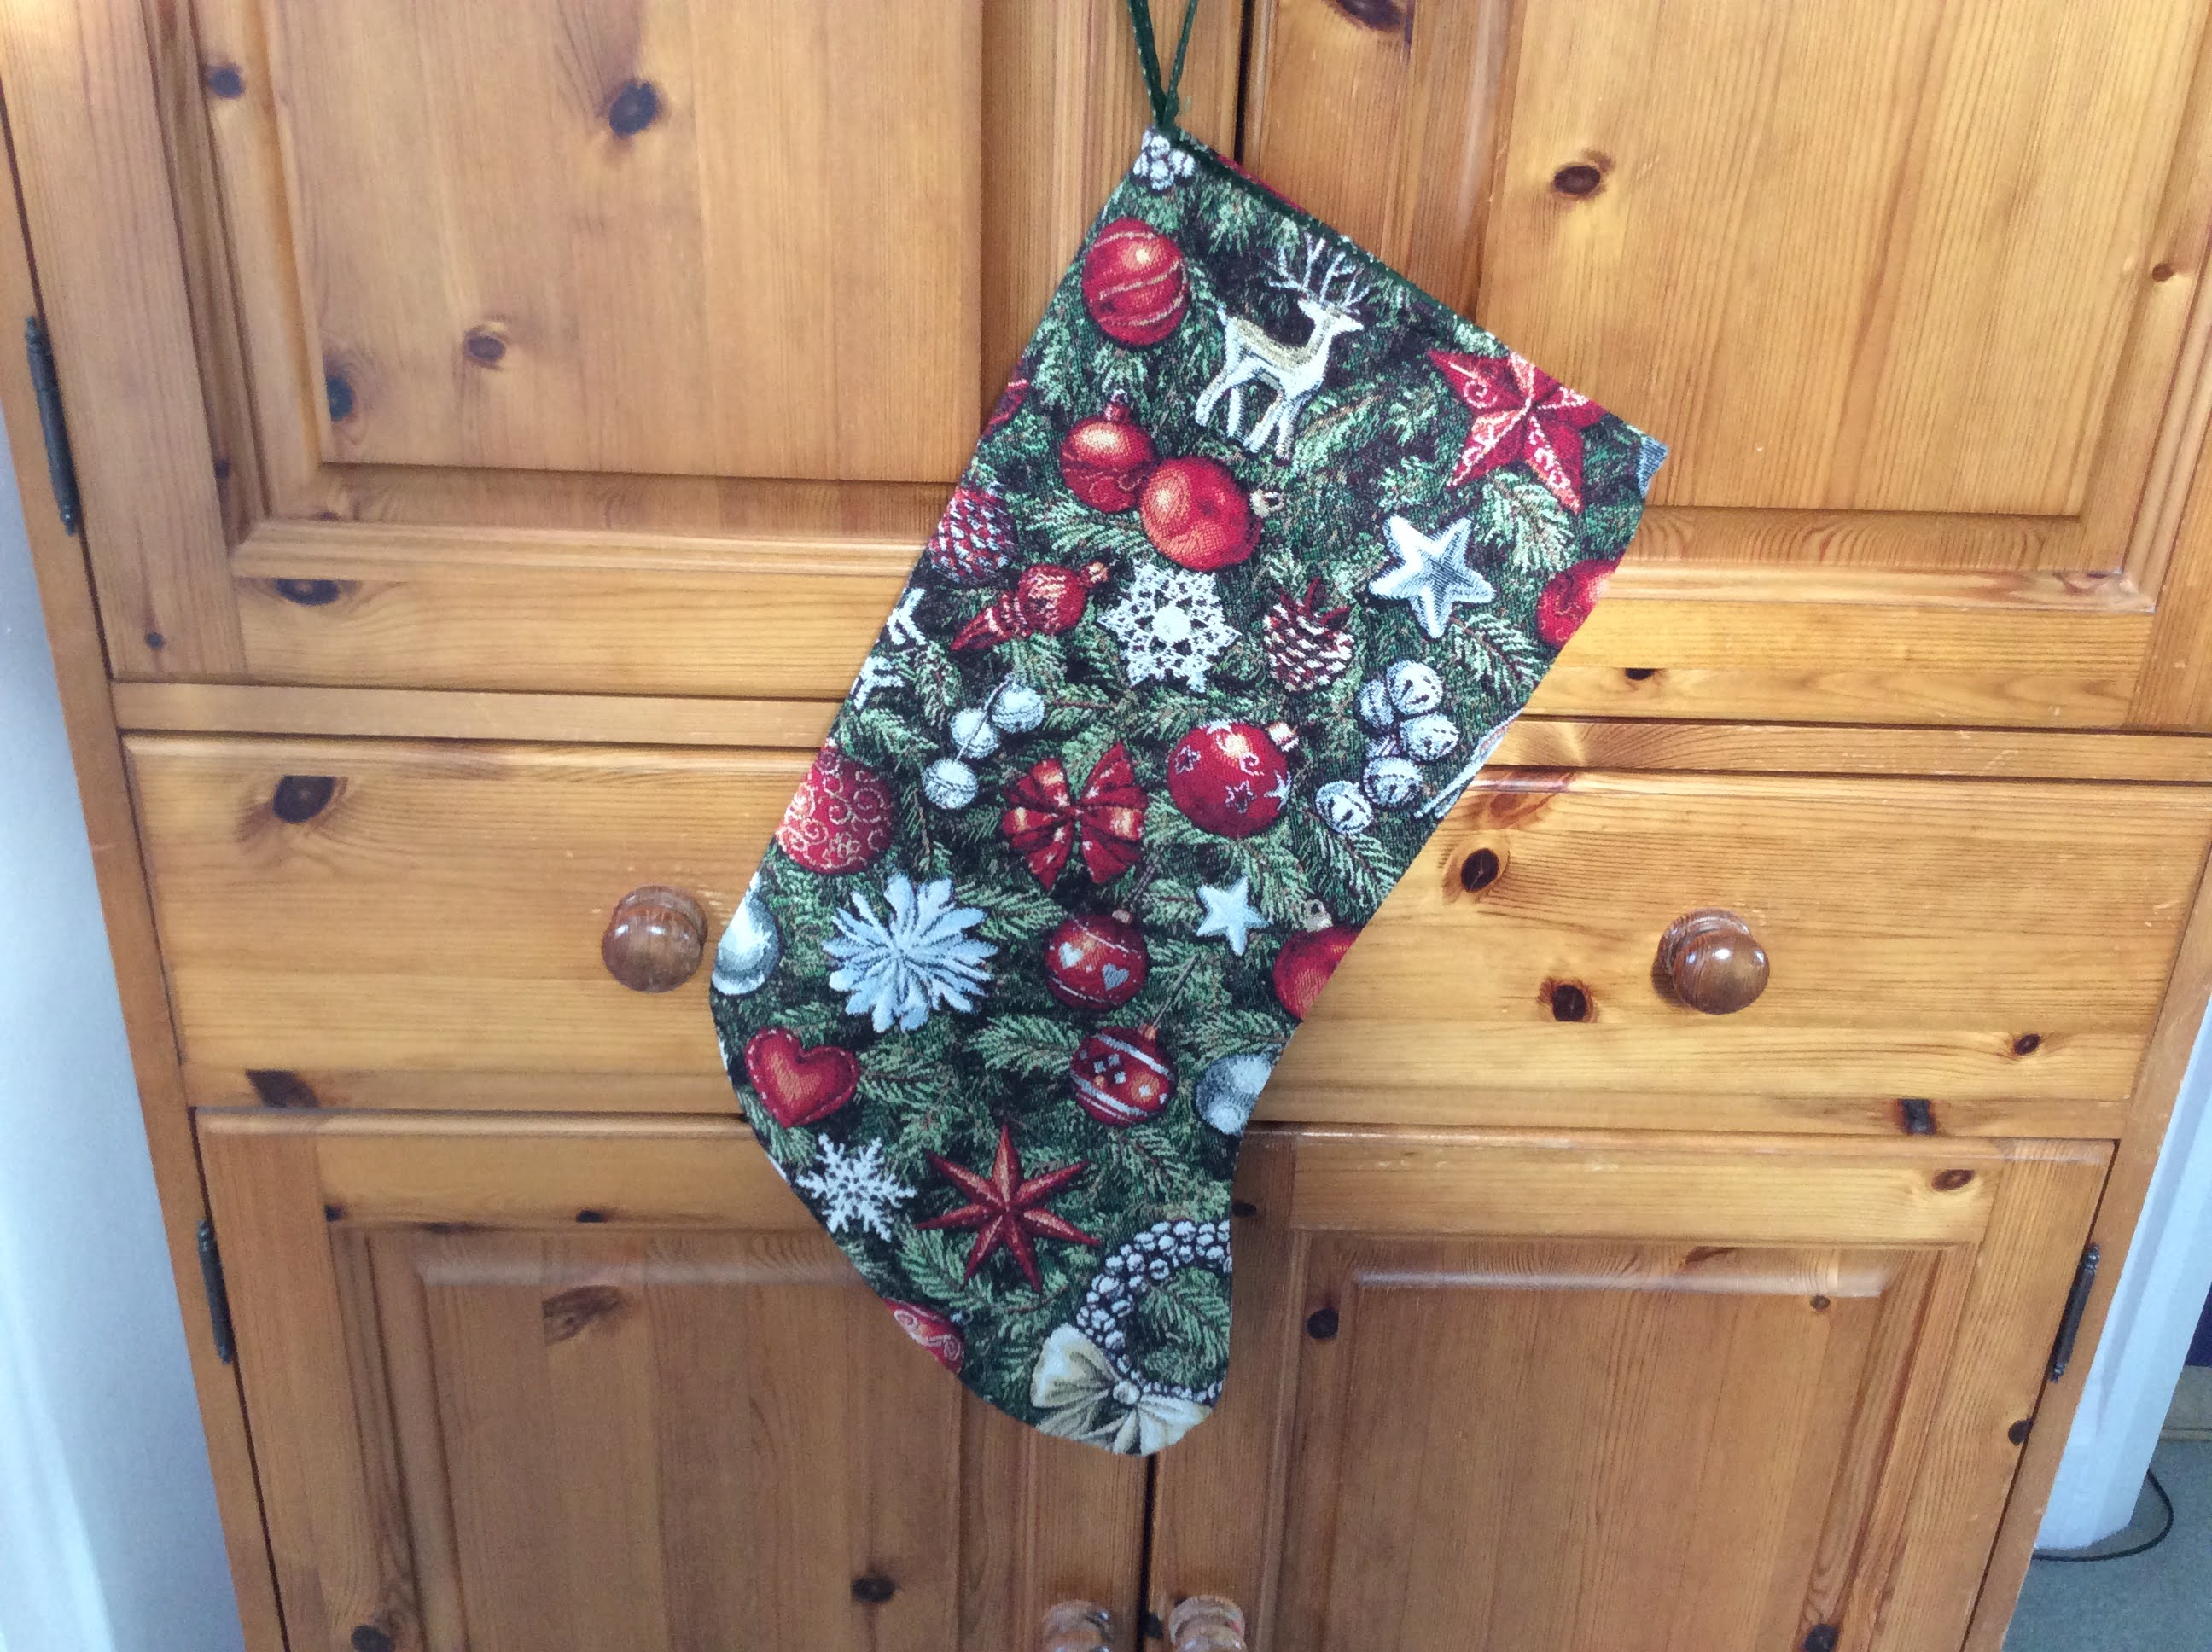 Christmas Stocking - Christmas tree and decorations